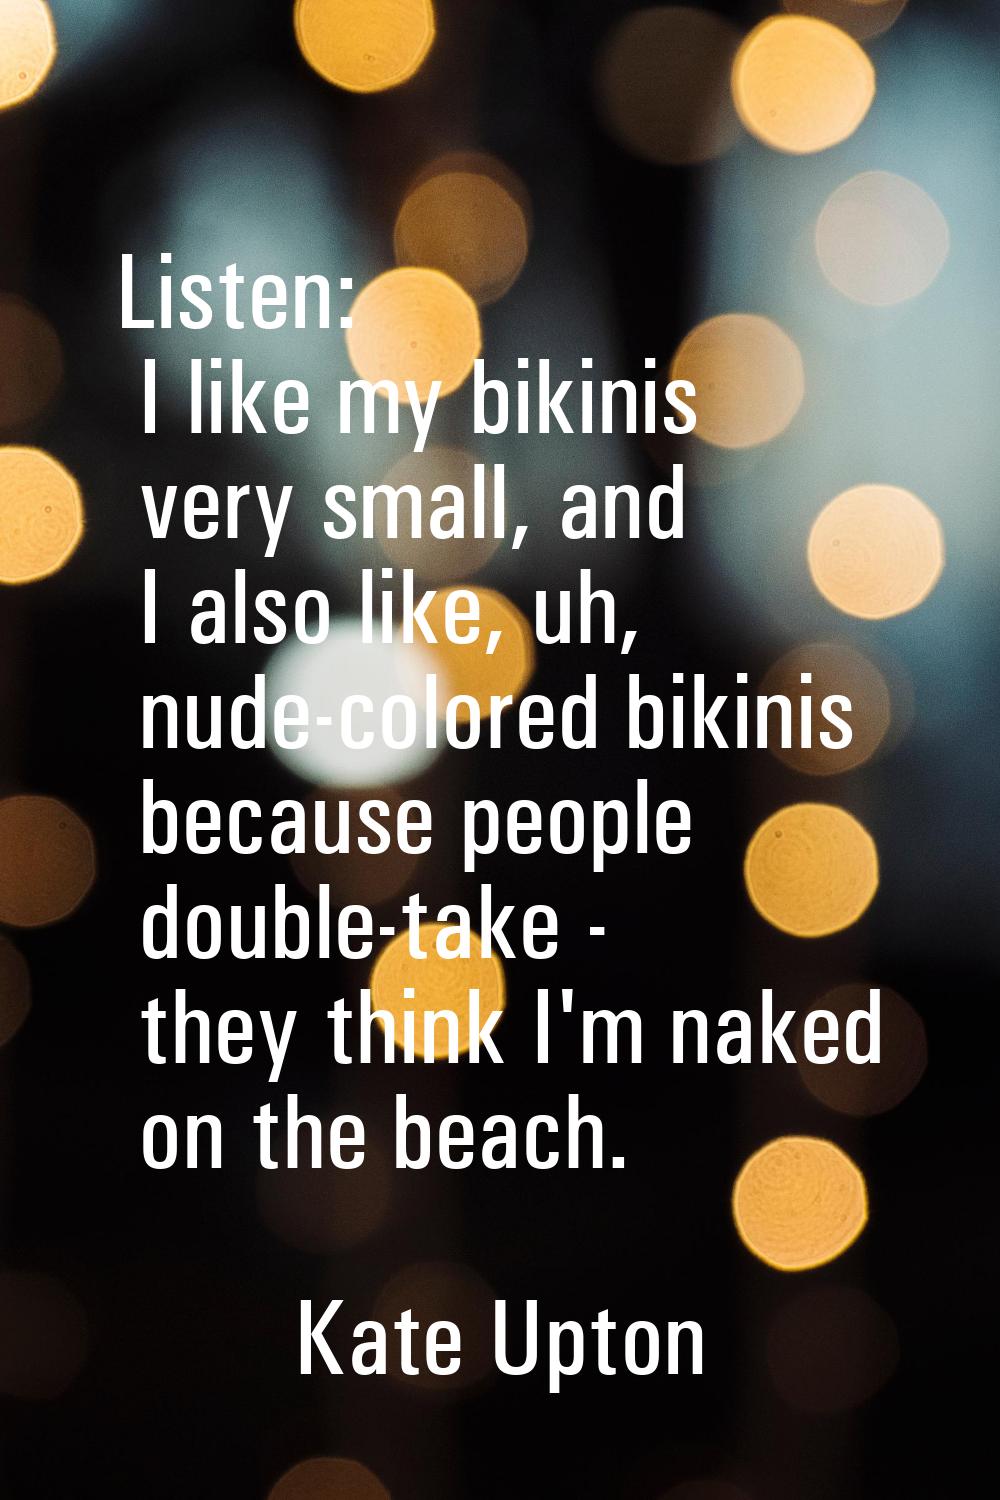 Listen: I like my bikinis very small, and I also like, uh, nude-colored bikinis because people doub